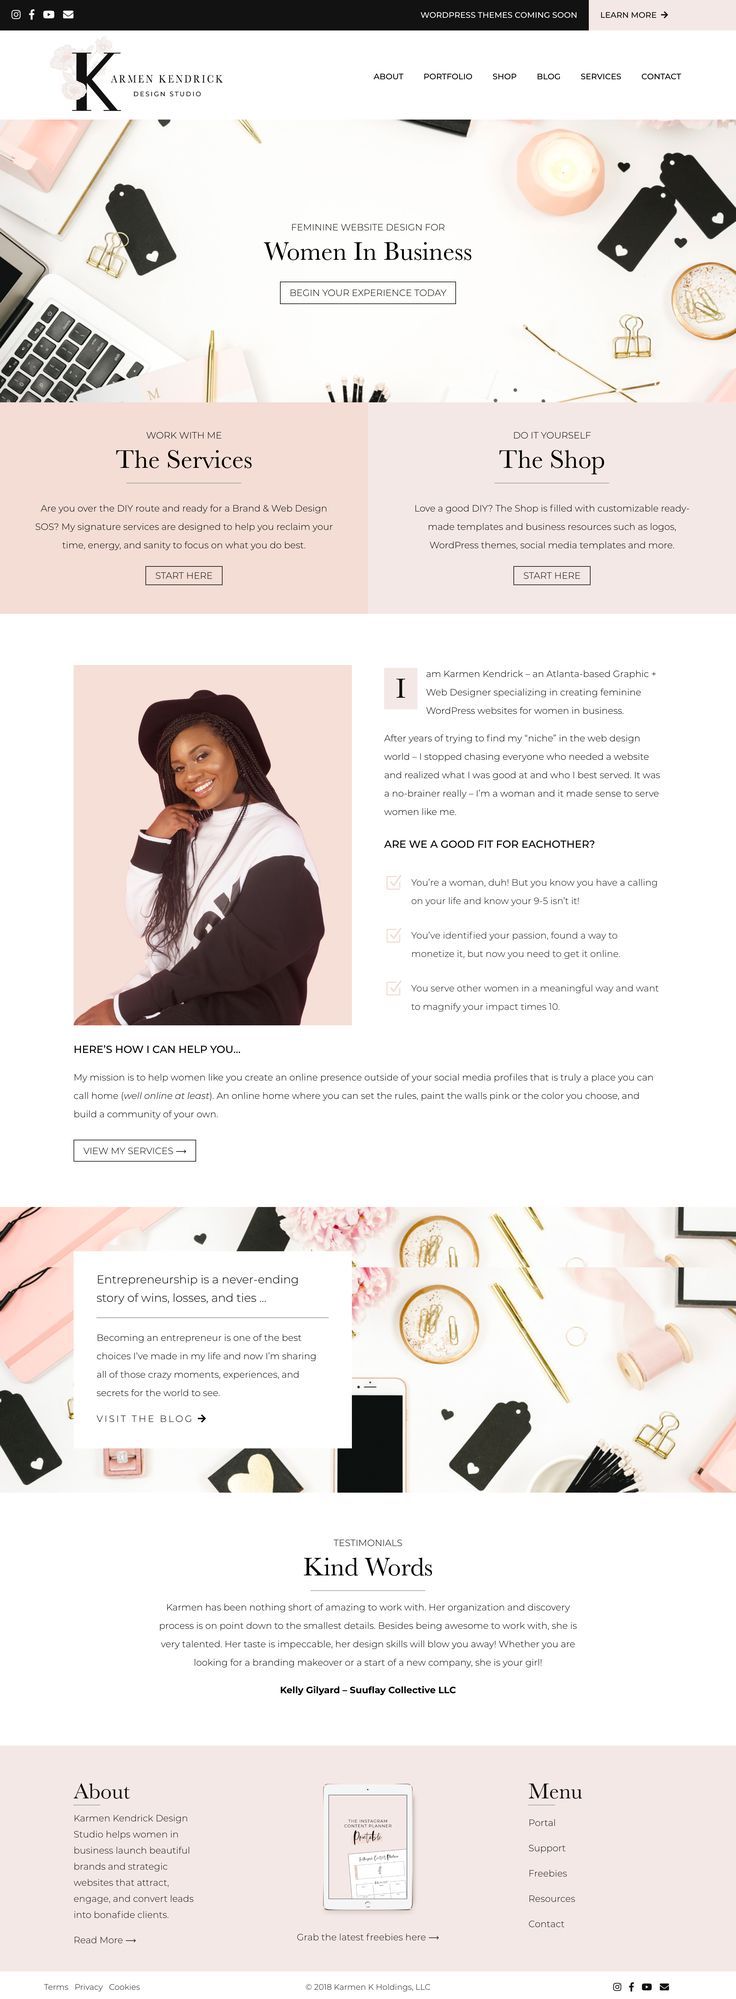 Website home page redesign for Karmen Kendrick Design Studio. Karmen is an Atlan...